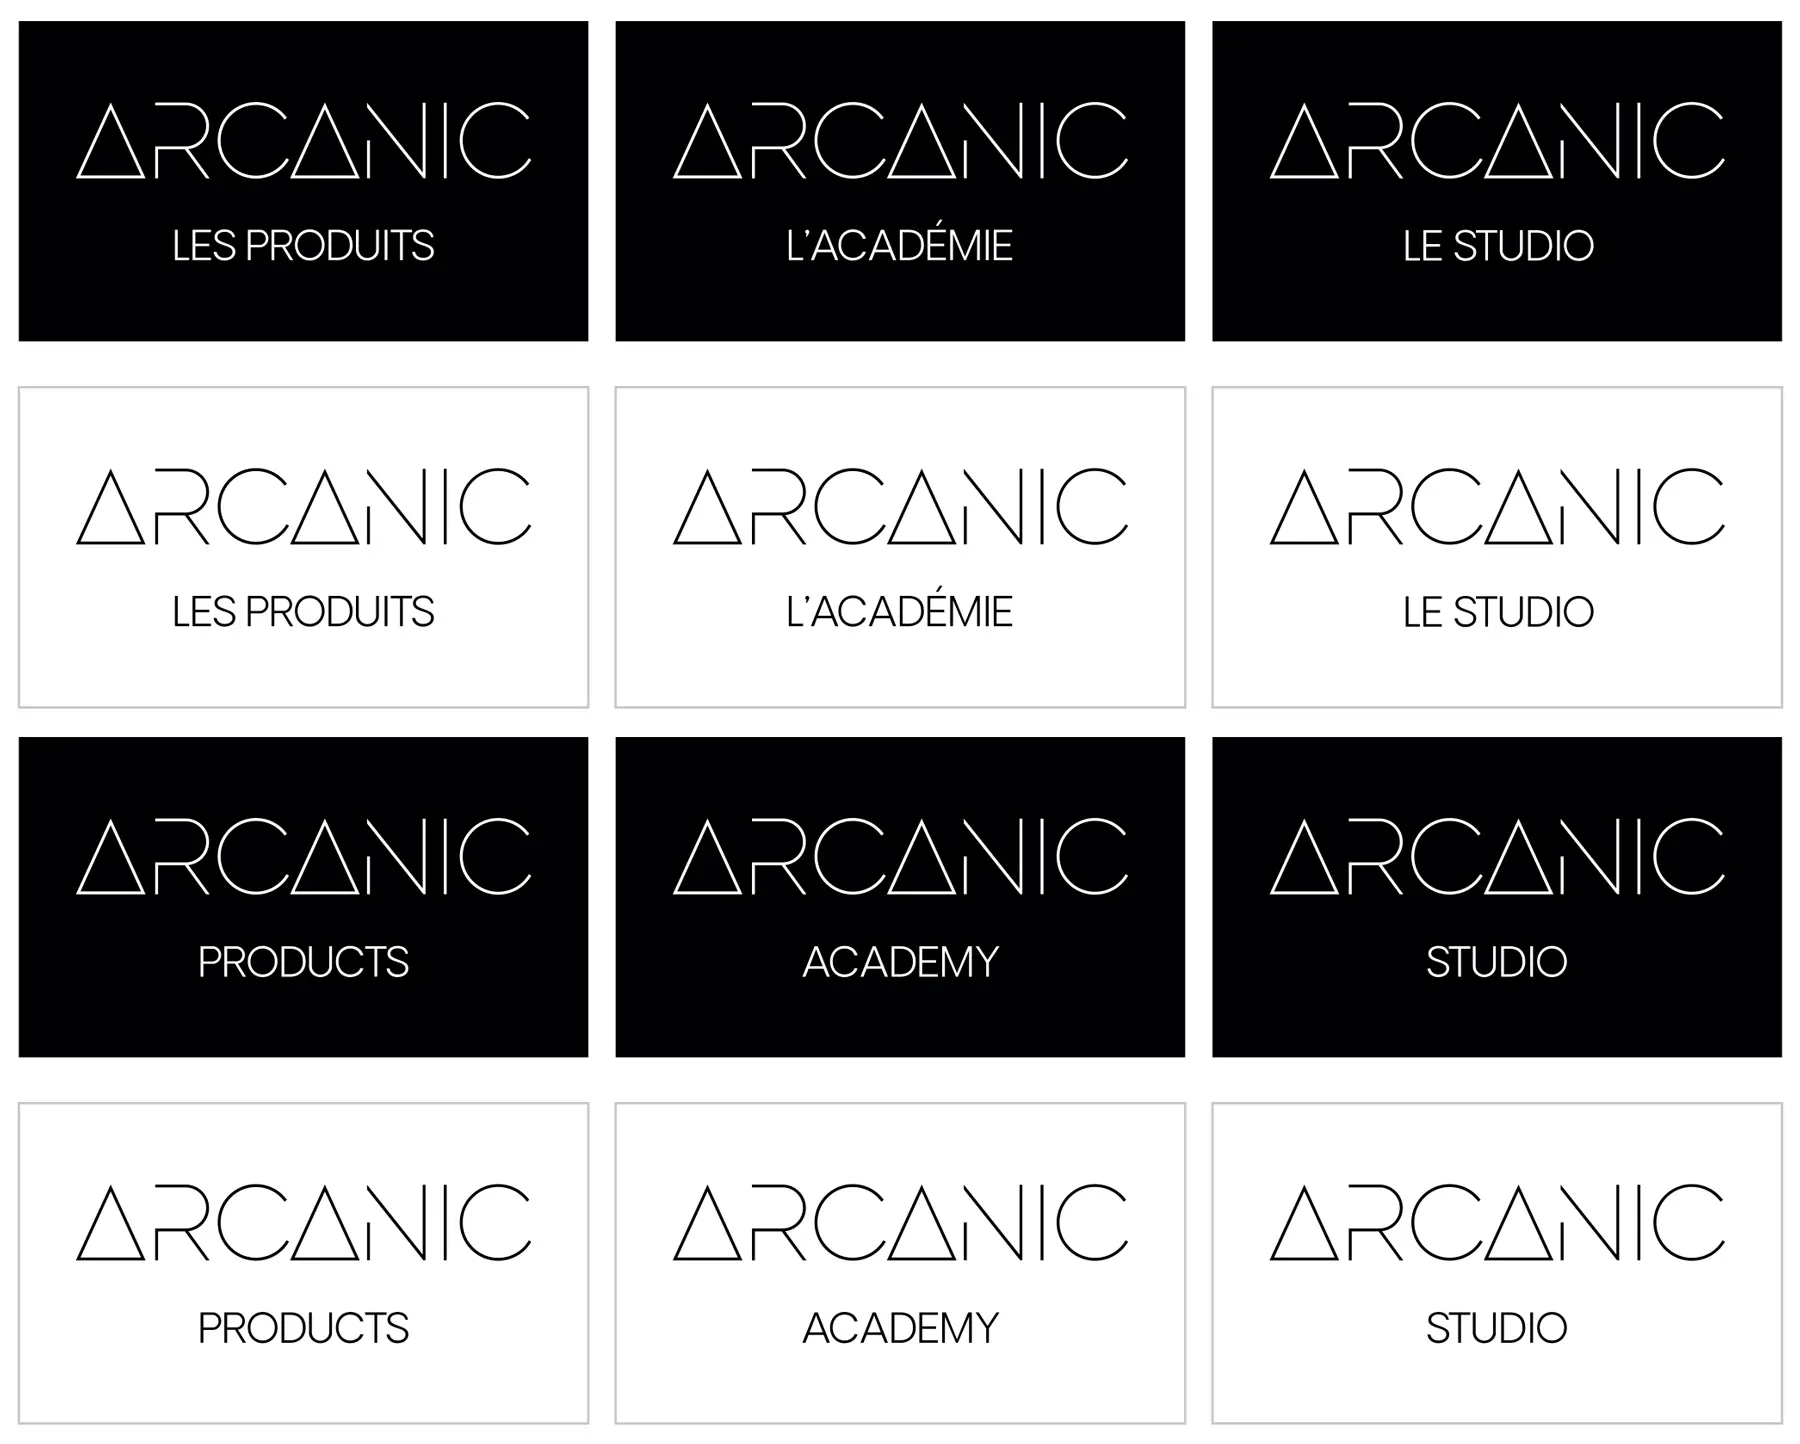 ARCANIC-Familly Logos fr en-by-KIKdesign.ca